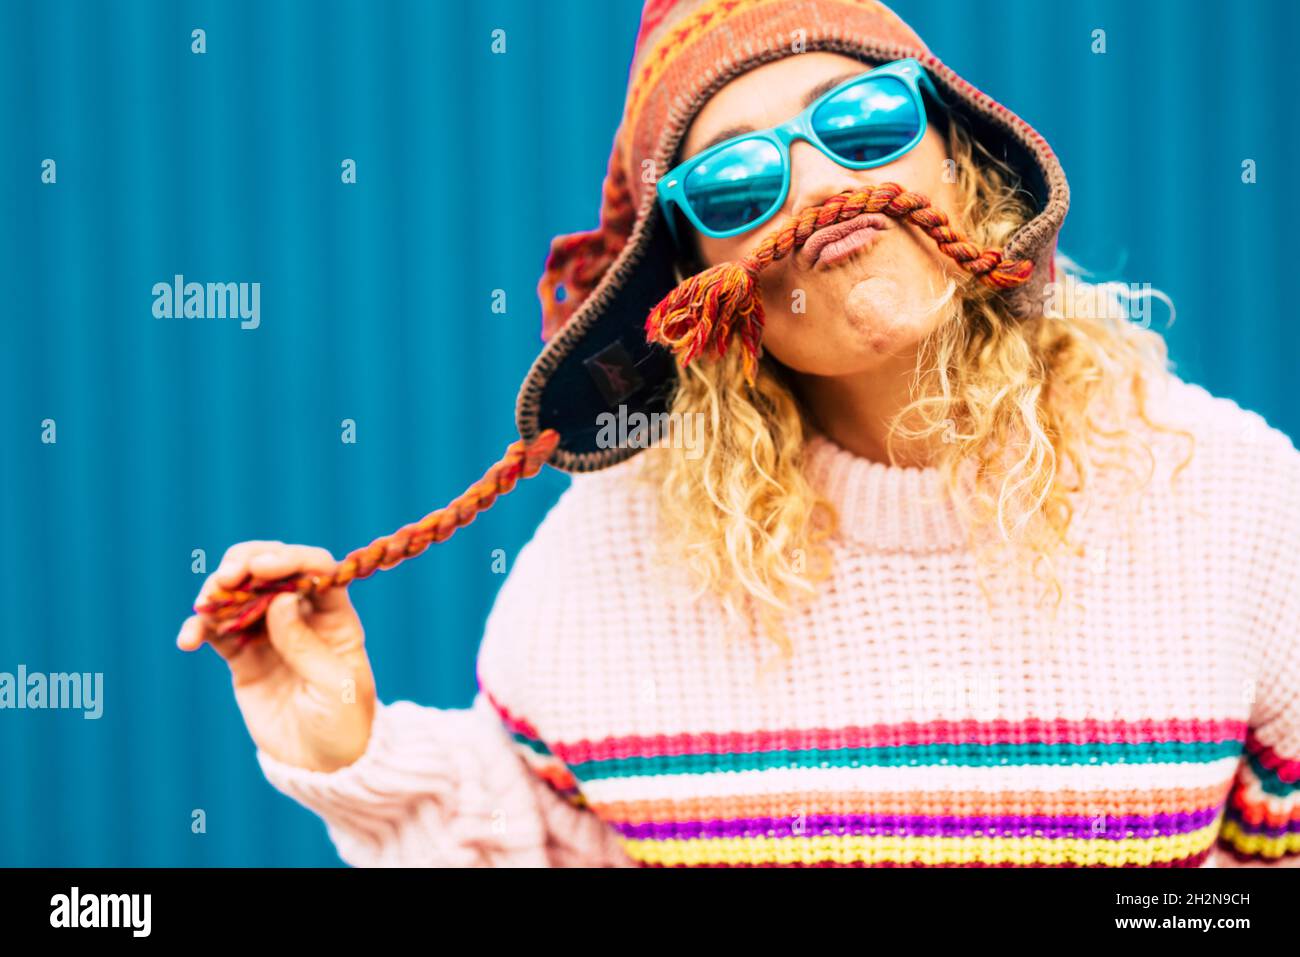 Playful woman wearing sunglasses making mustache from knit hat Stock Photo